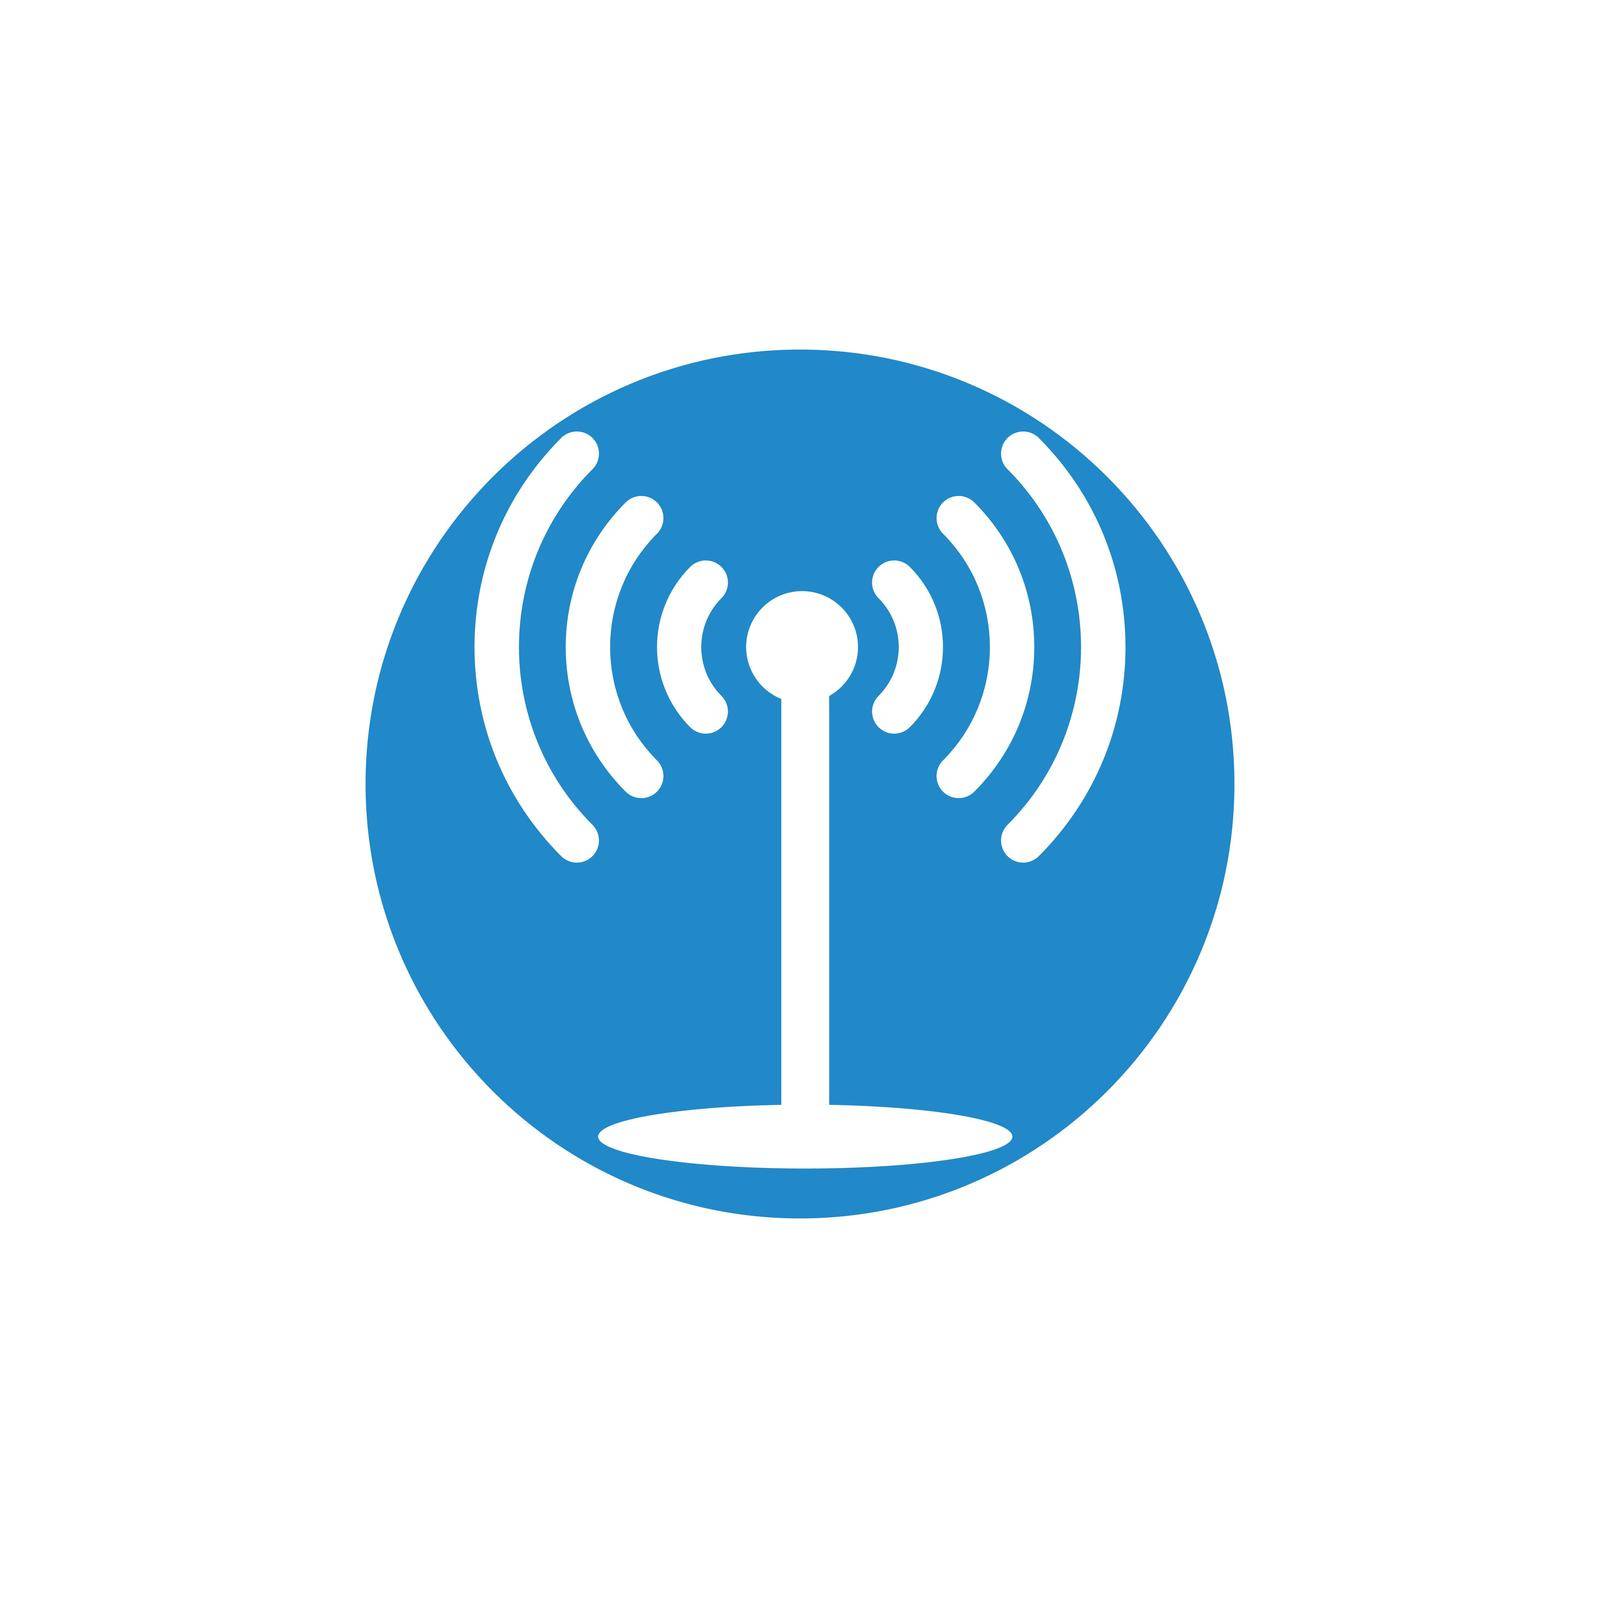 wireless Logo Template vector illustration